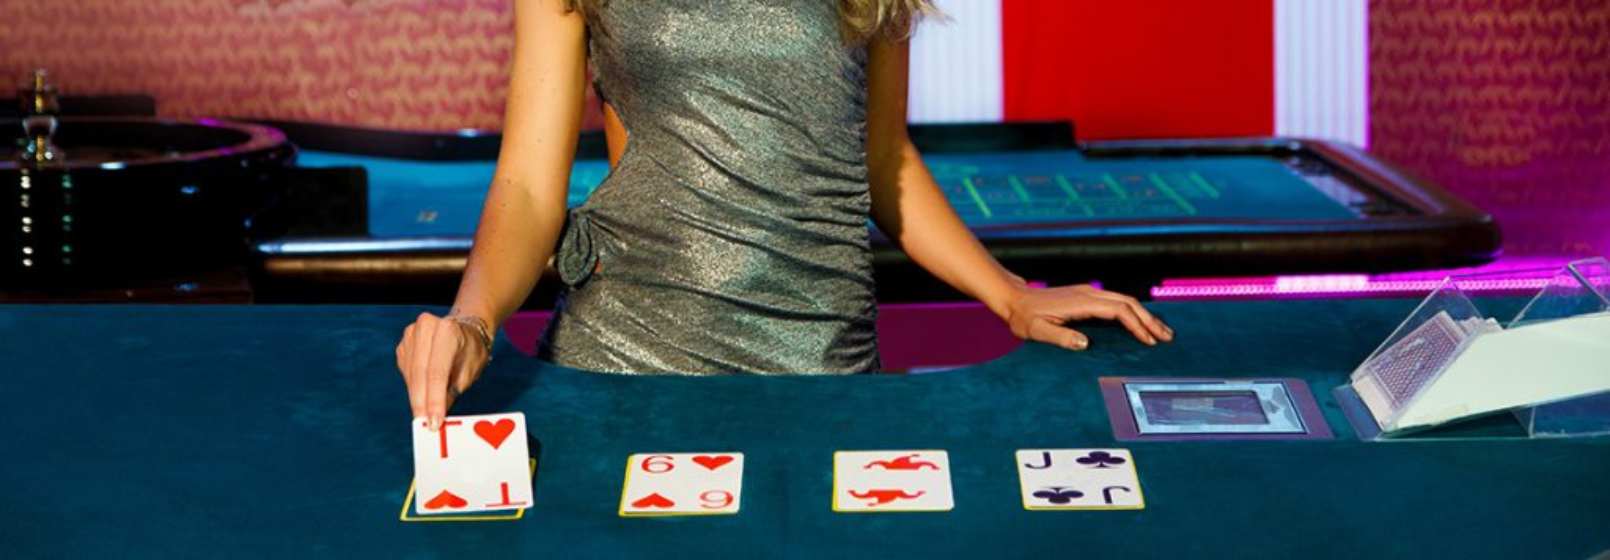 joaca casino live fortuna